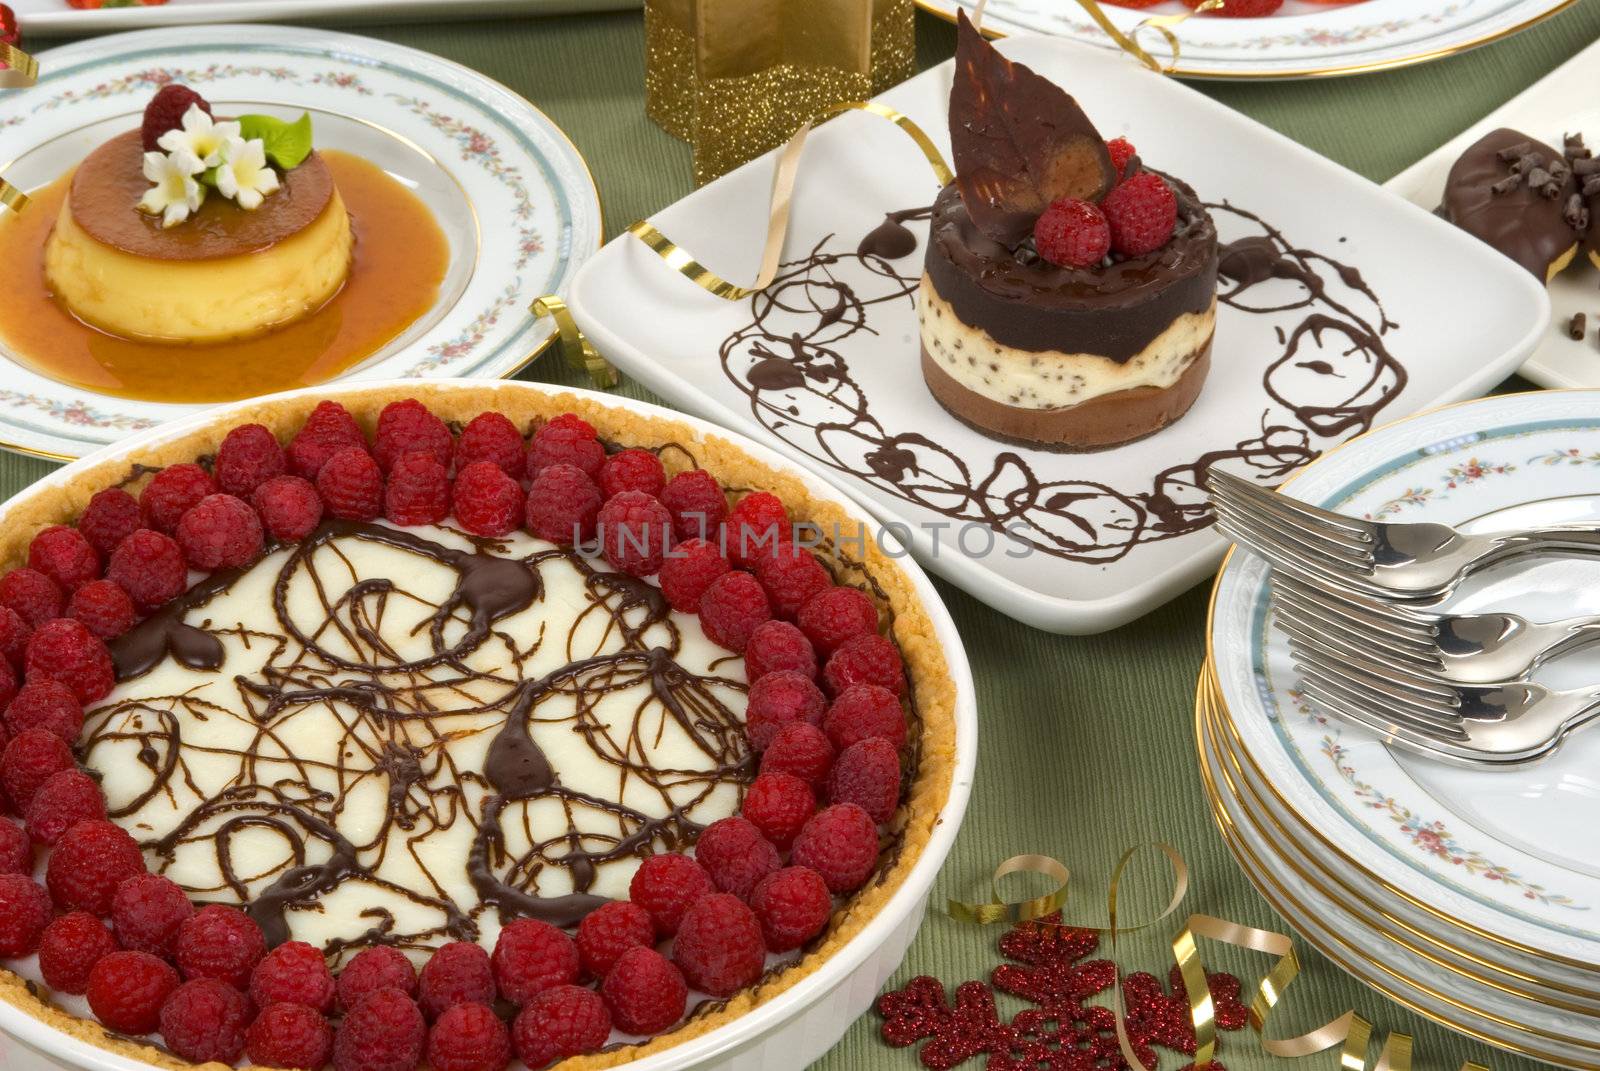 Desserts by BVDC